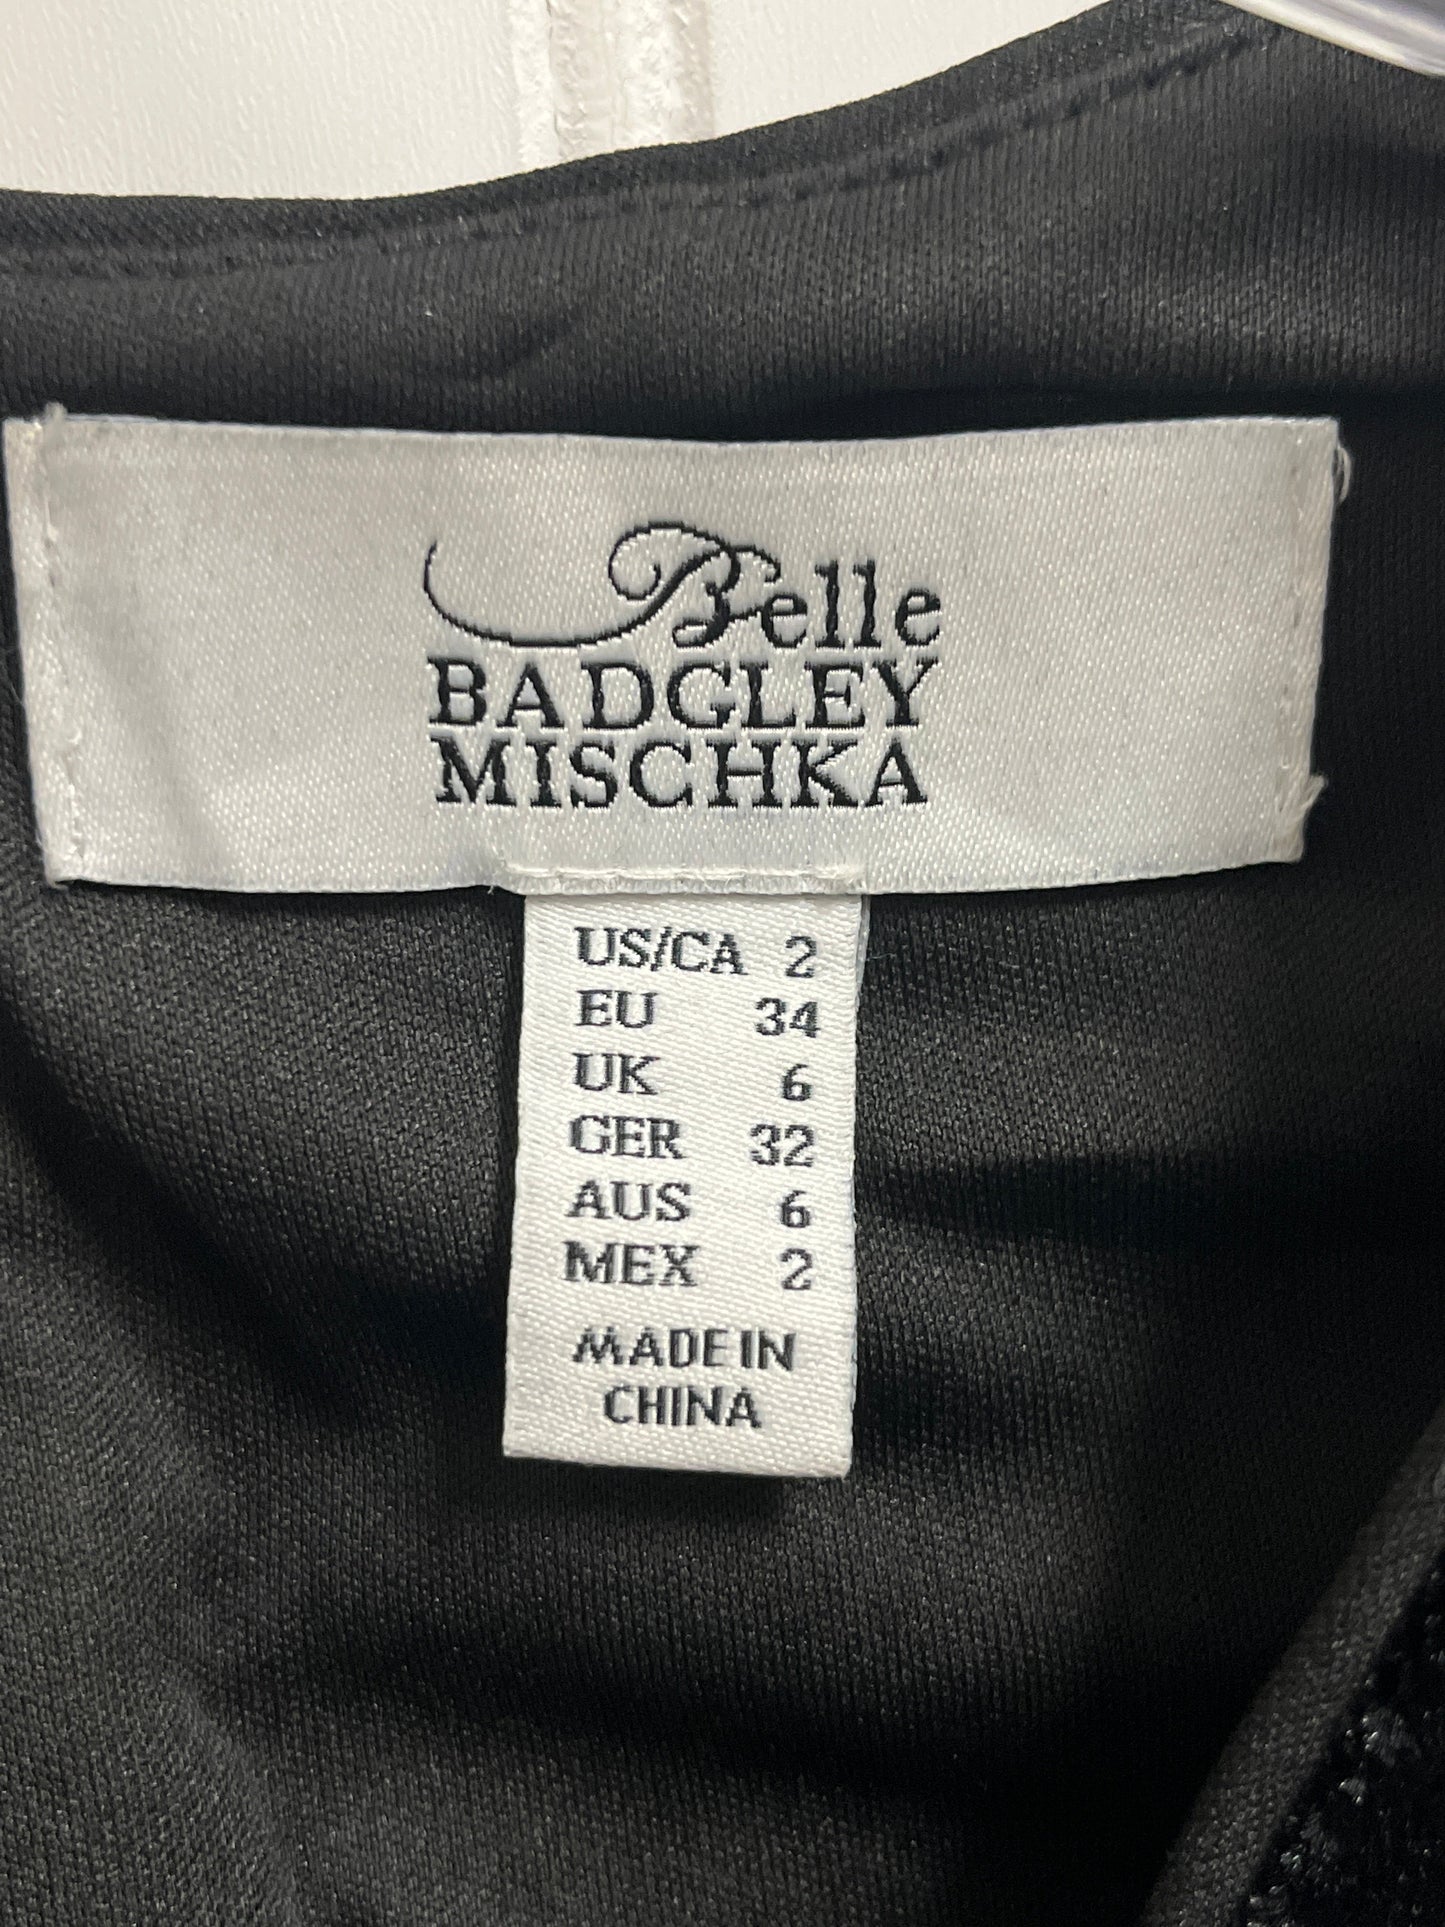 Black Dress Designer Badgley Mischka, Size Xs